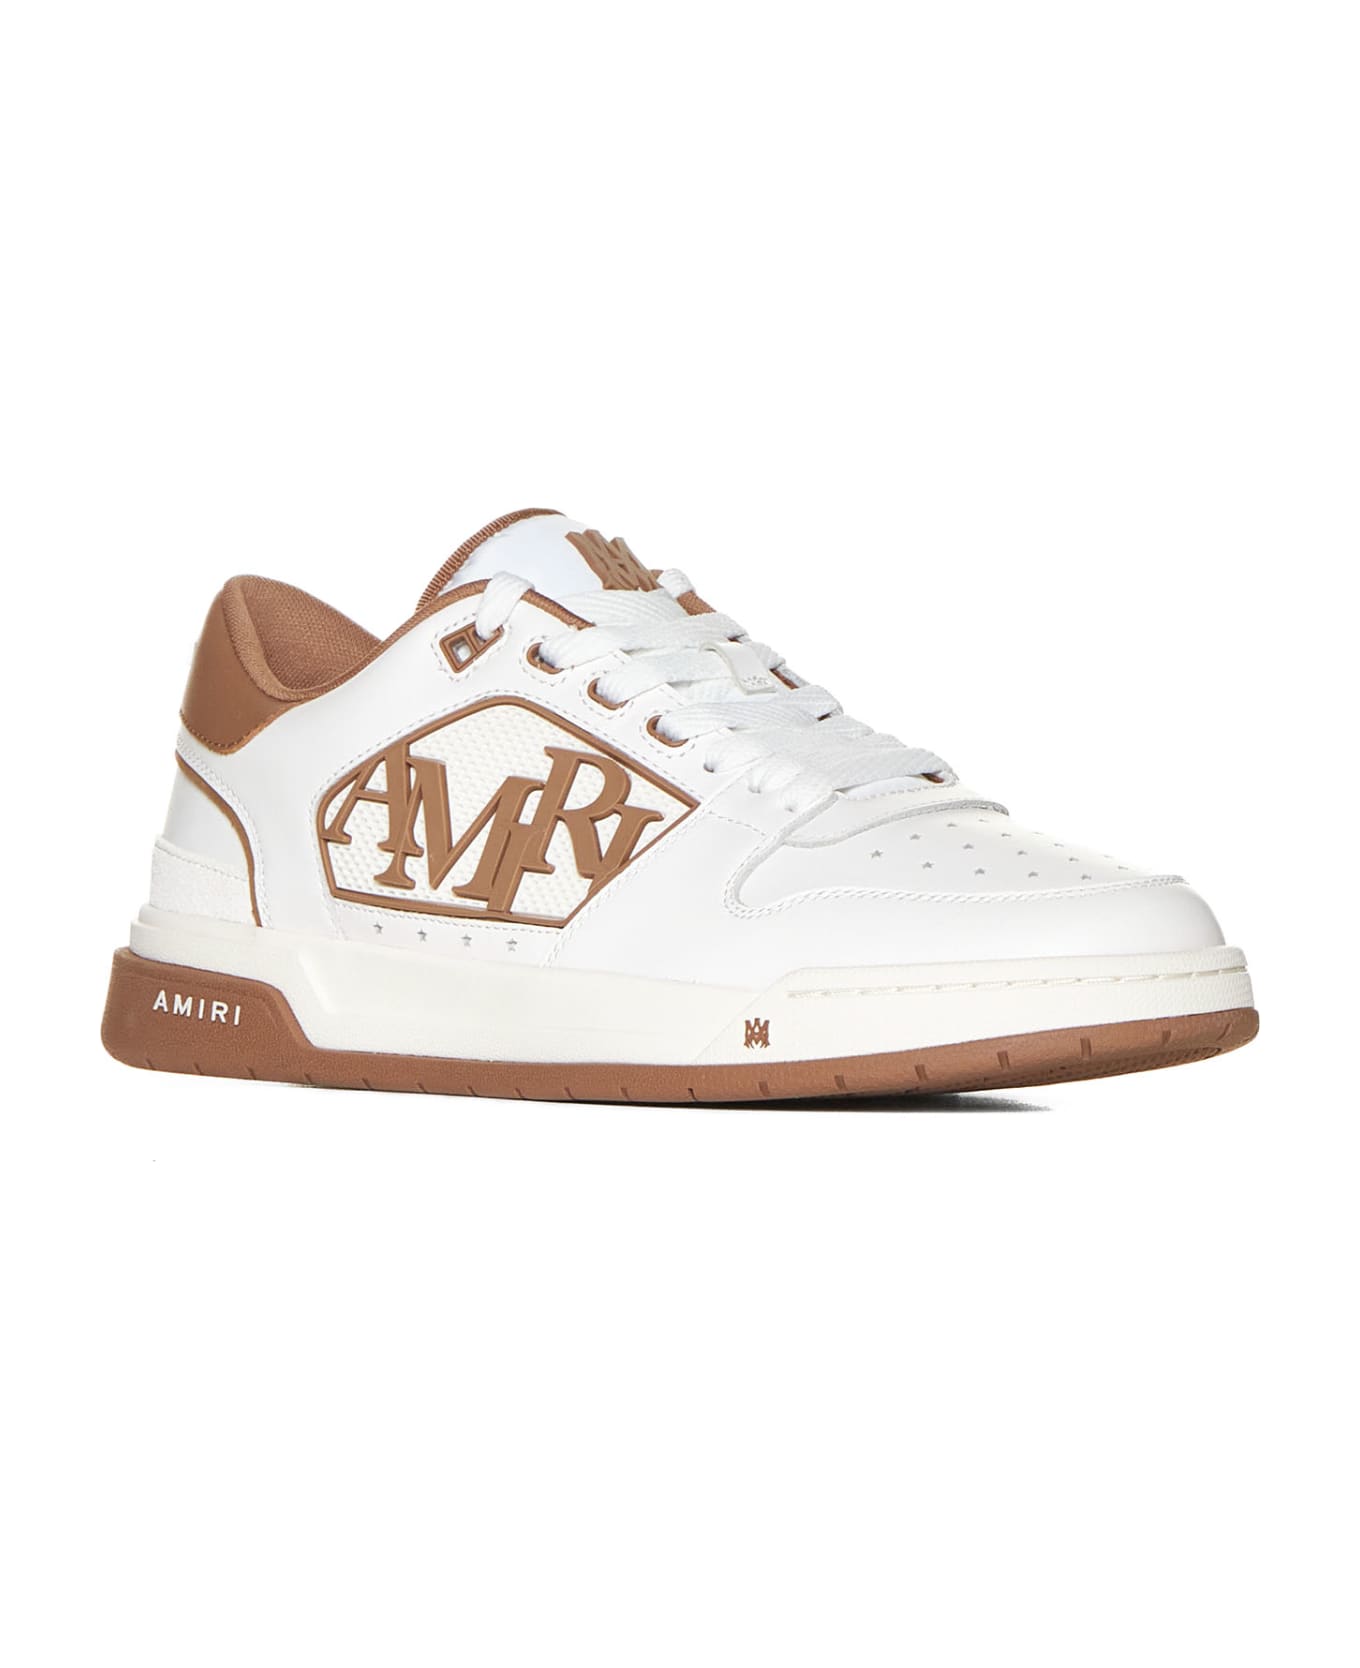 AMIRI Sneakers - White brown